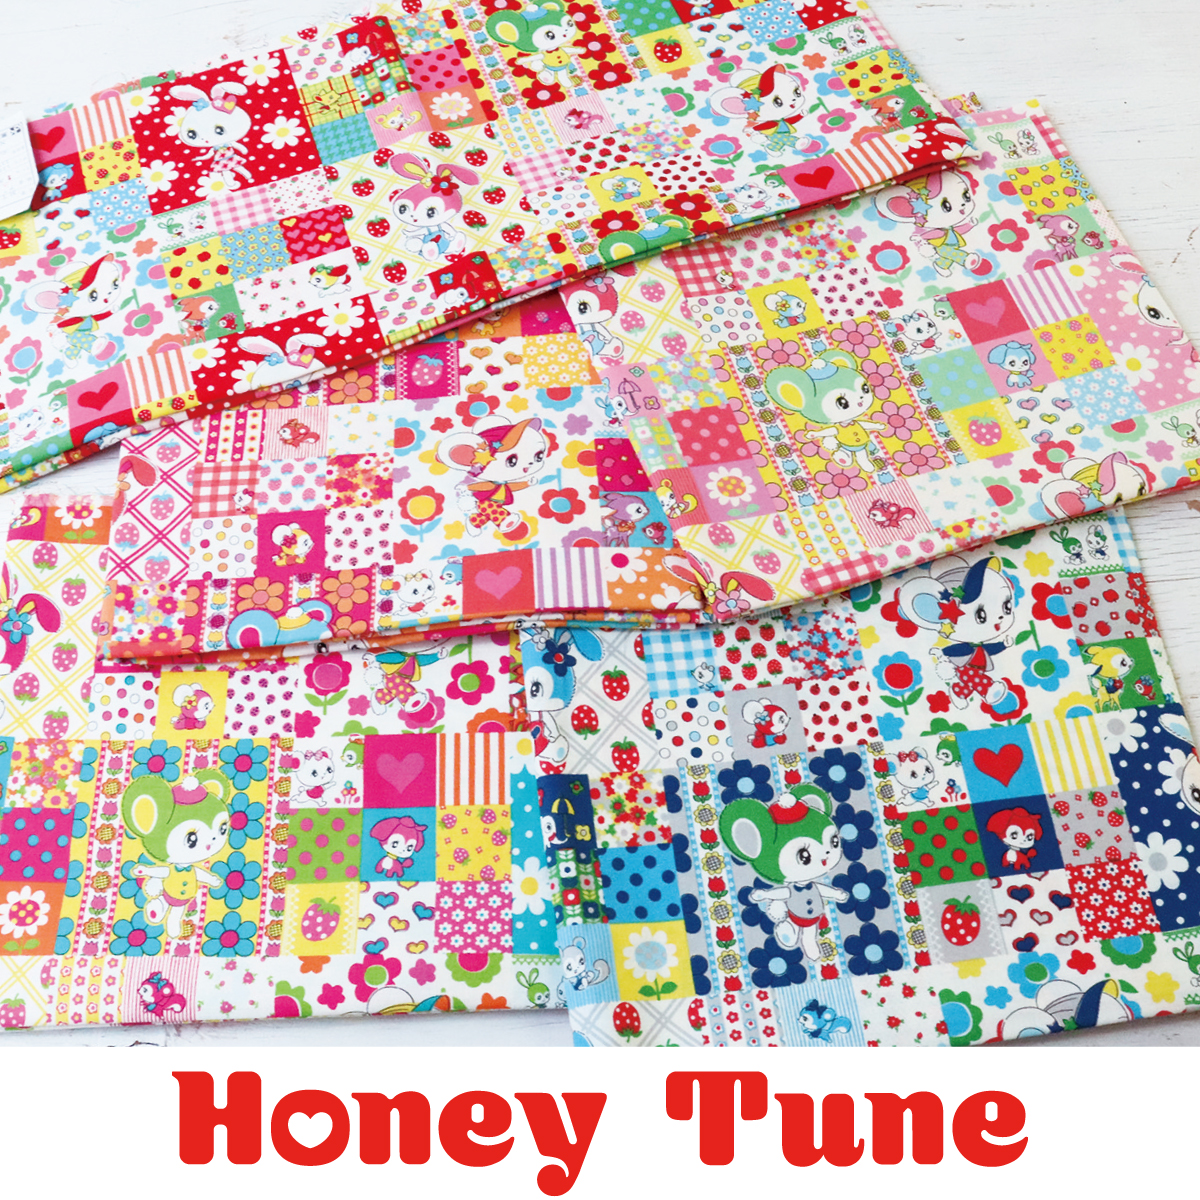 ■HT30000R-1 Honey Tune 2021 ハニーチューン「ときめきパッチワーク」 原反約12m (巻)